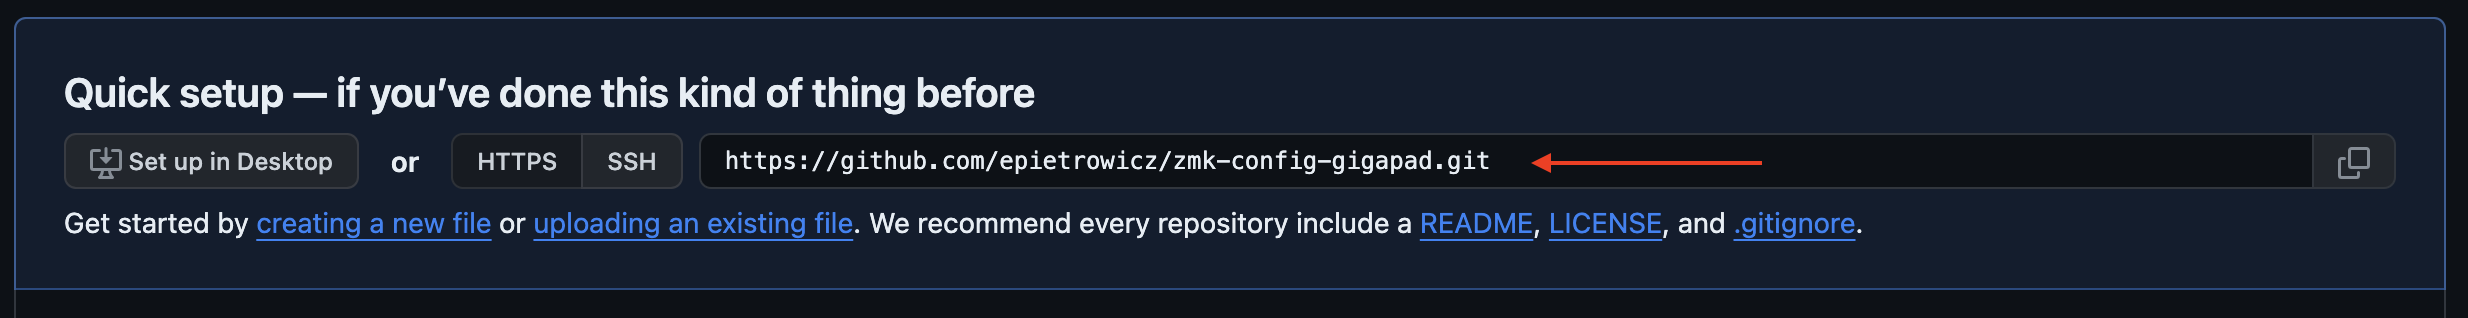 Github repository URL match